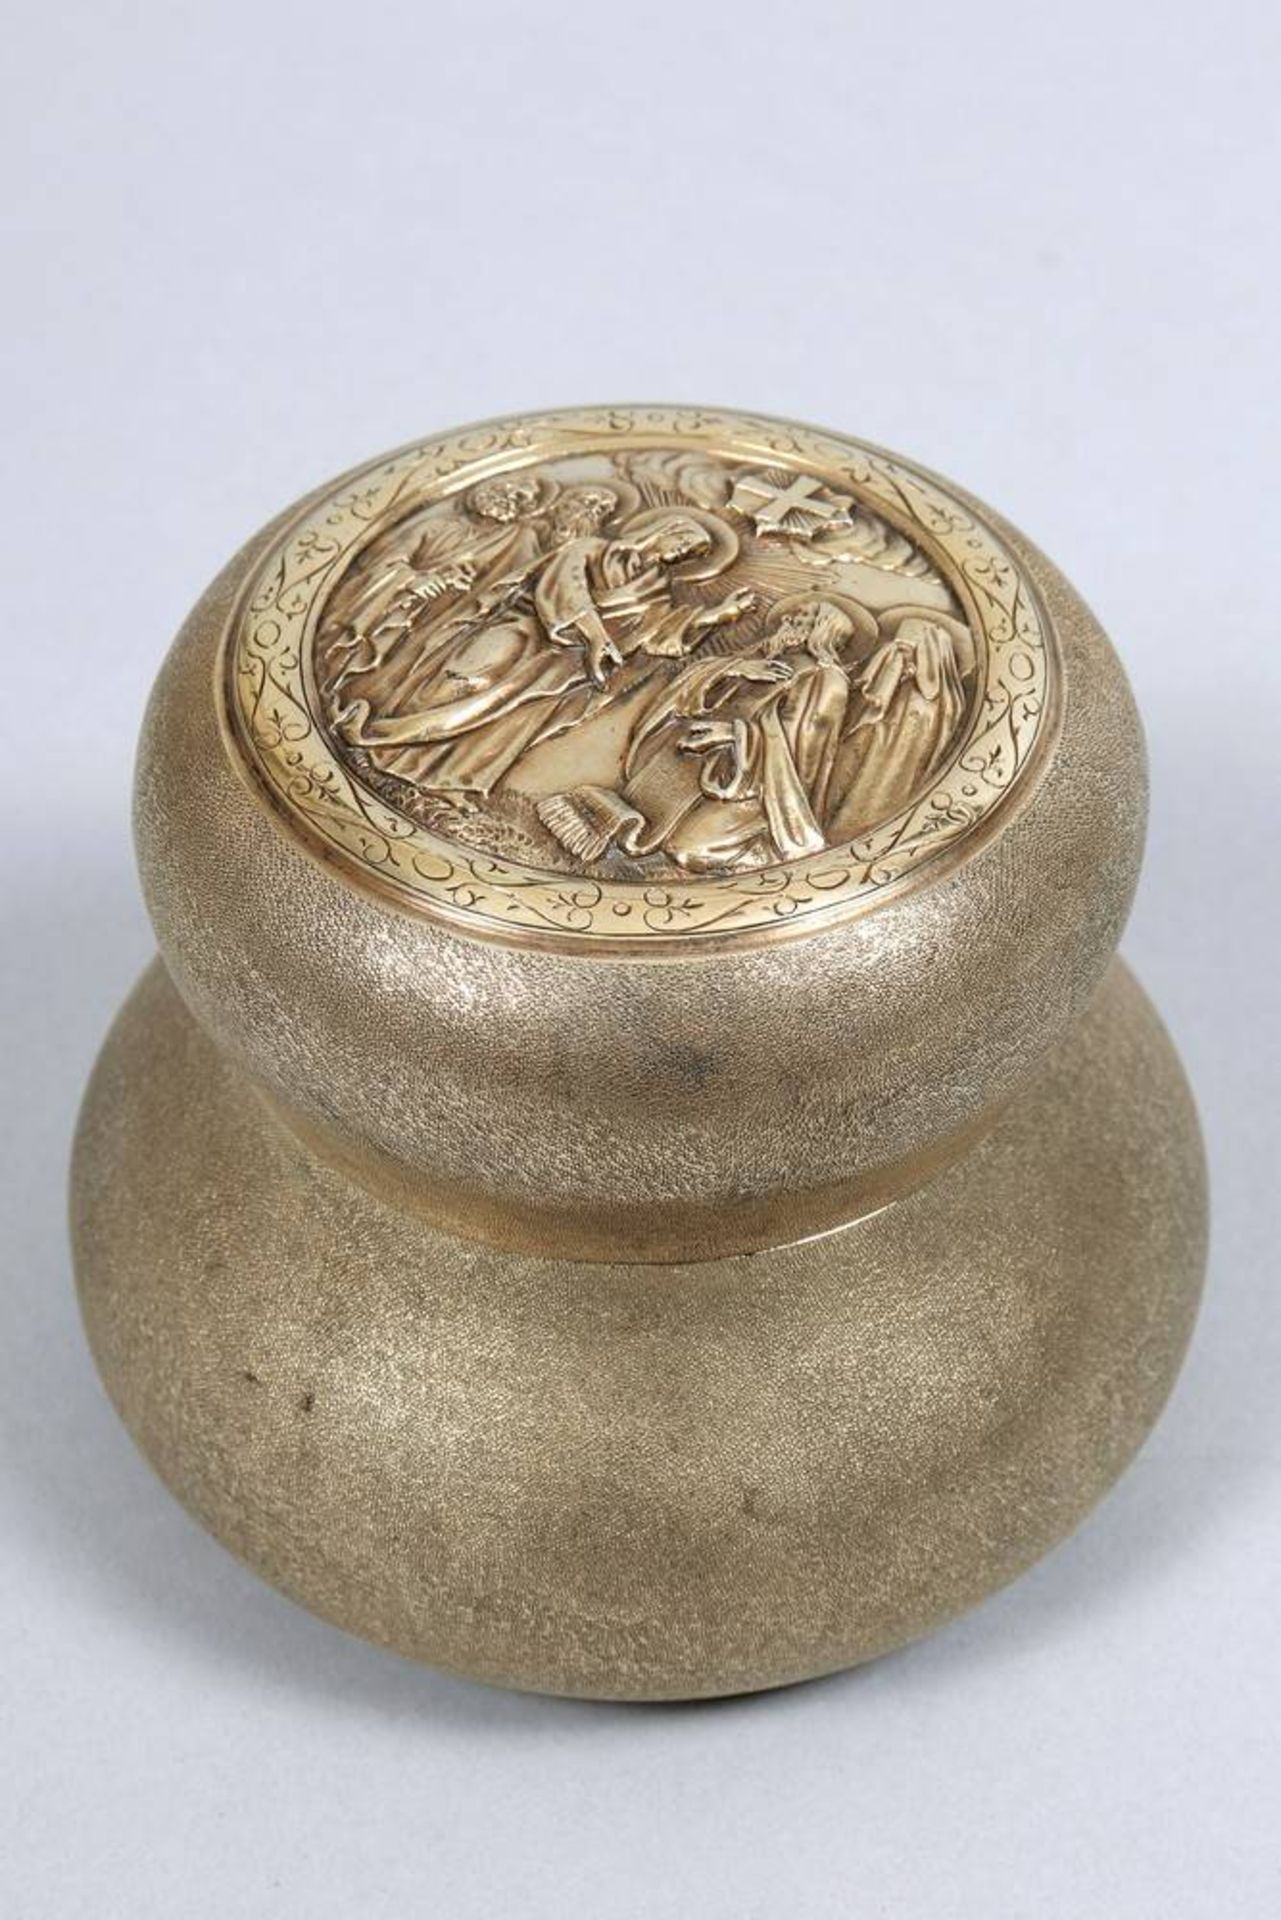 Oblatendose, Silber, 84 Zolotnik, vergoldet, Sazikov, Moskau, um 1870/80 kalebassenförmiger Korpus